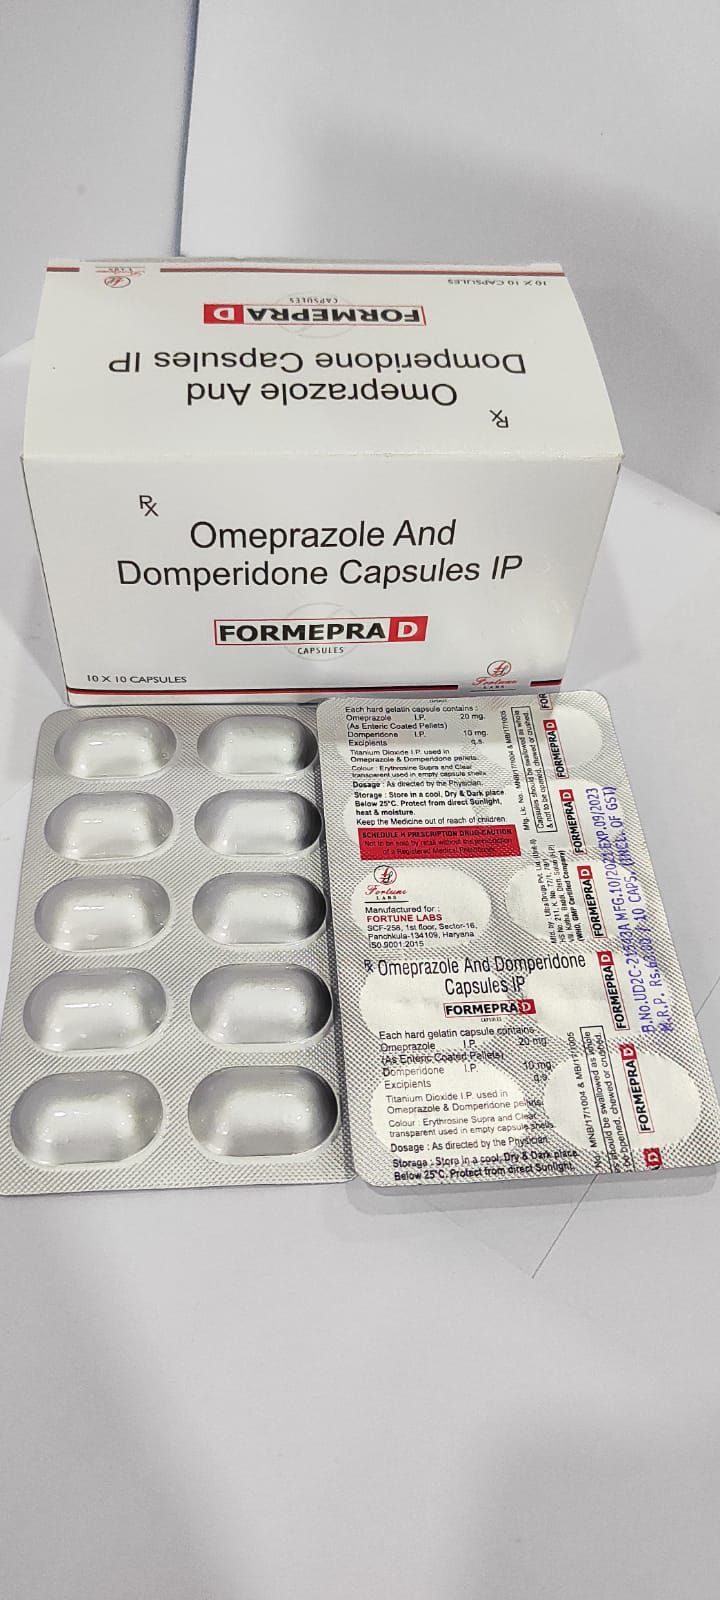 omeprazole with domperidone